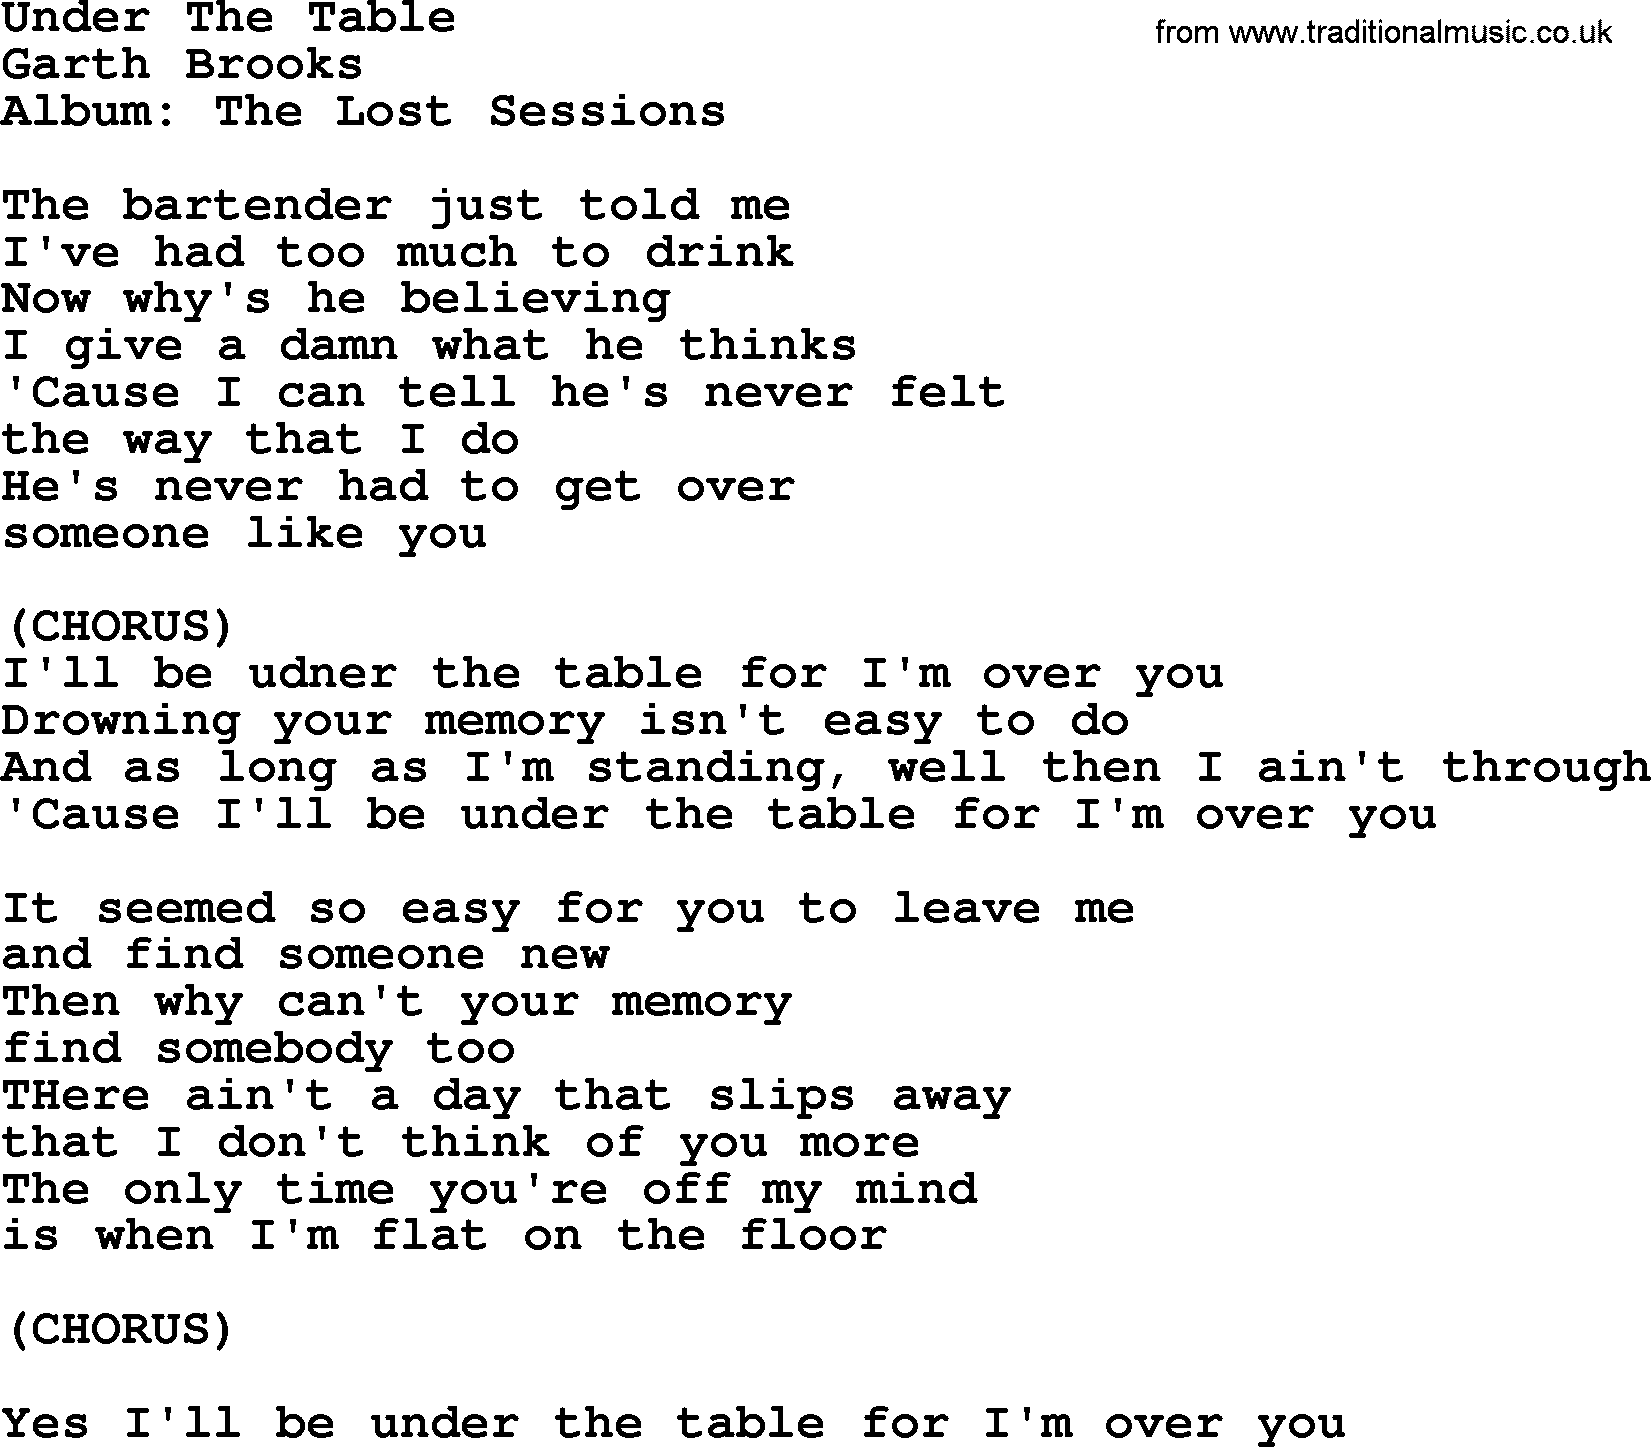 Garth Brooks song: Under The Table, lyrics